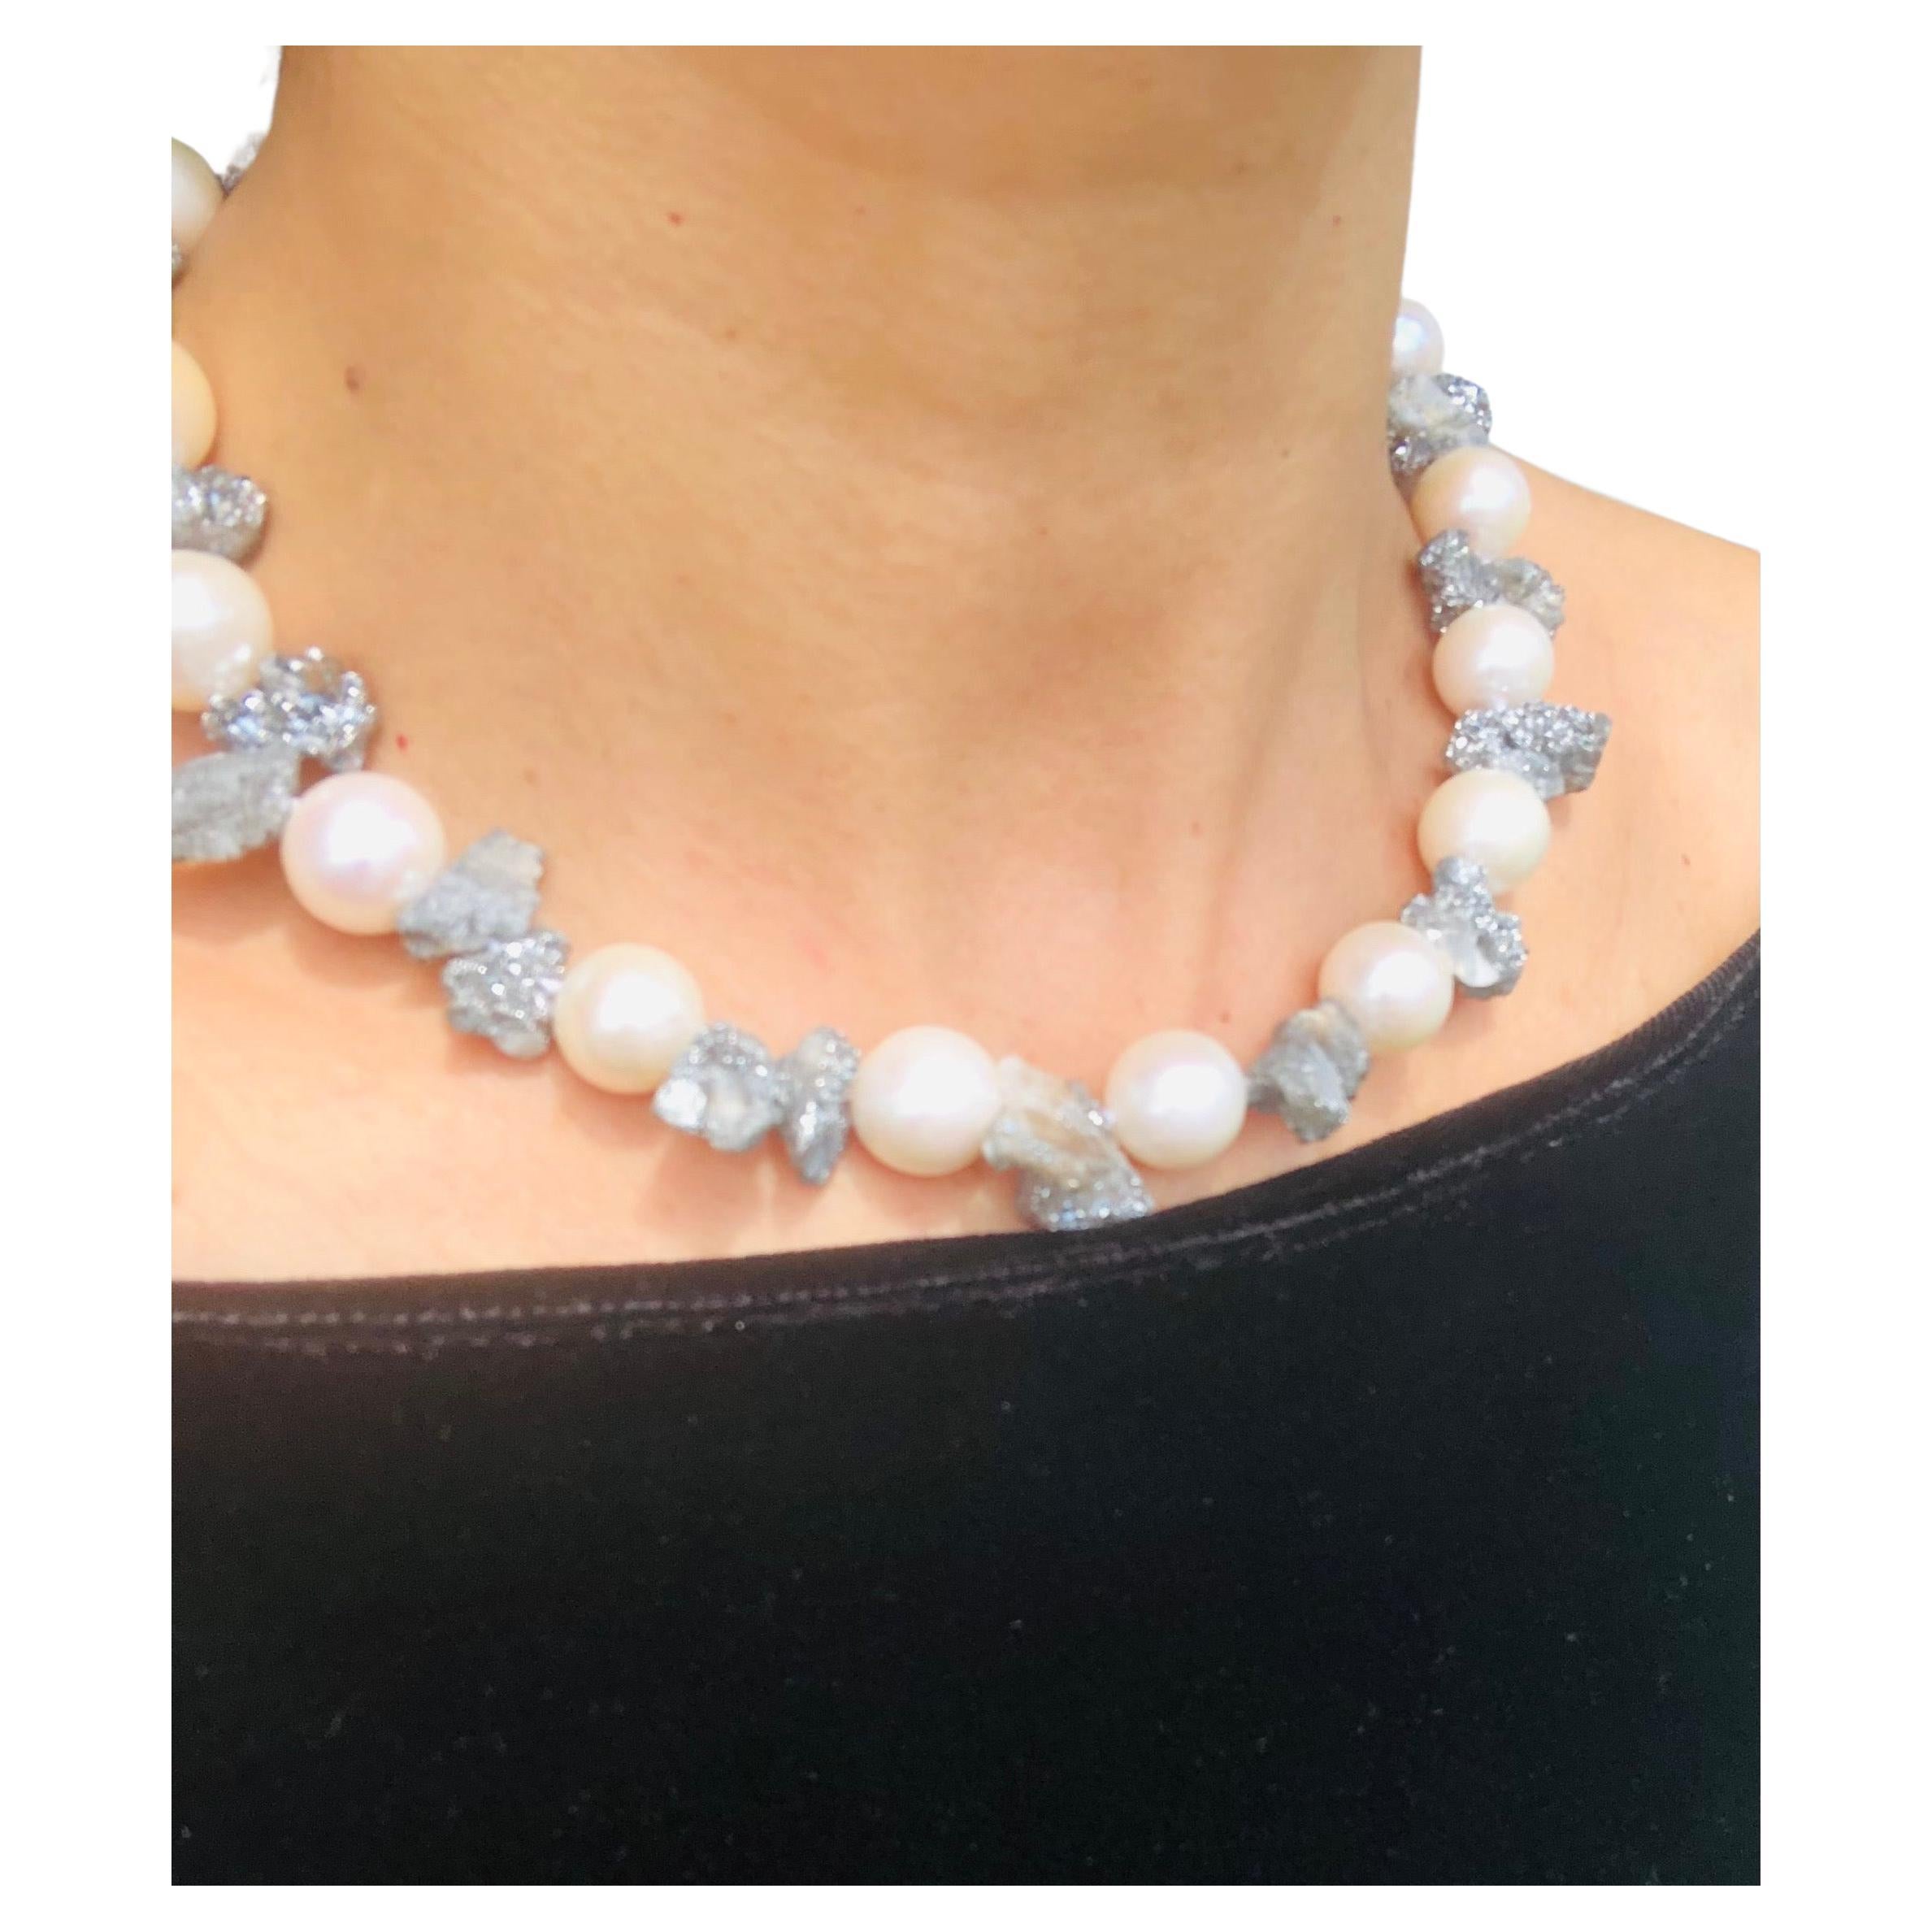 A.Jeschel  Lustrous 14mm pearls and sparkly druzy Quartz necklace. For Sale